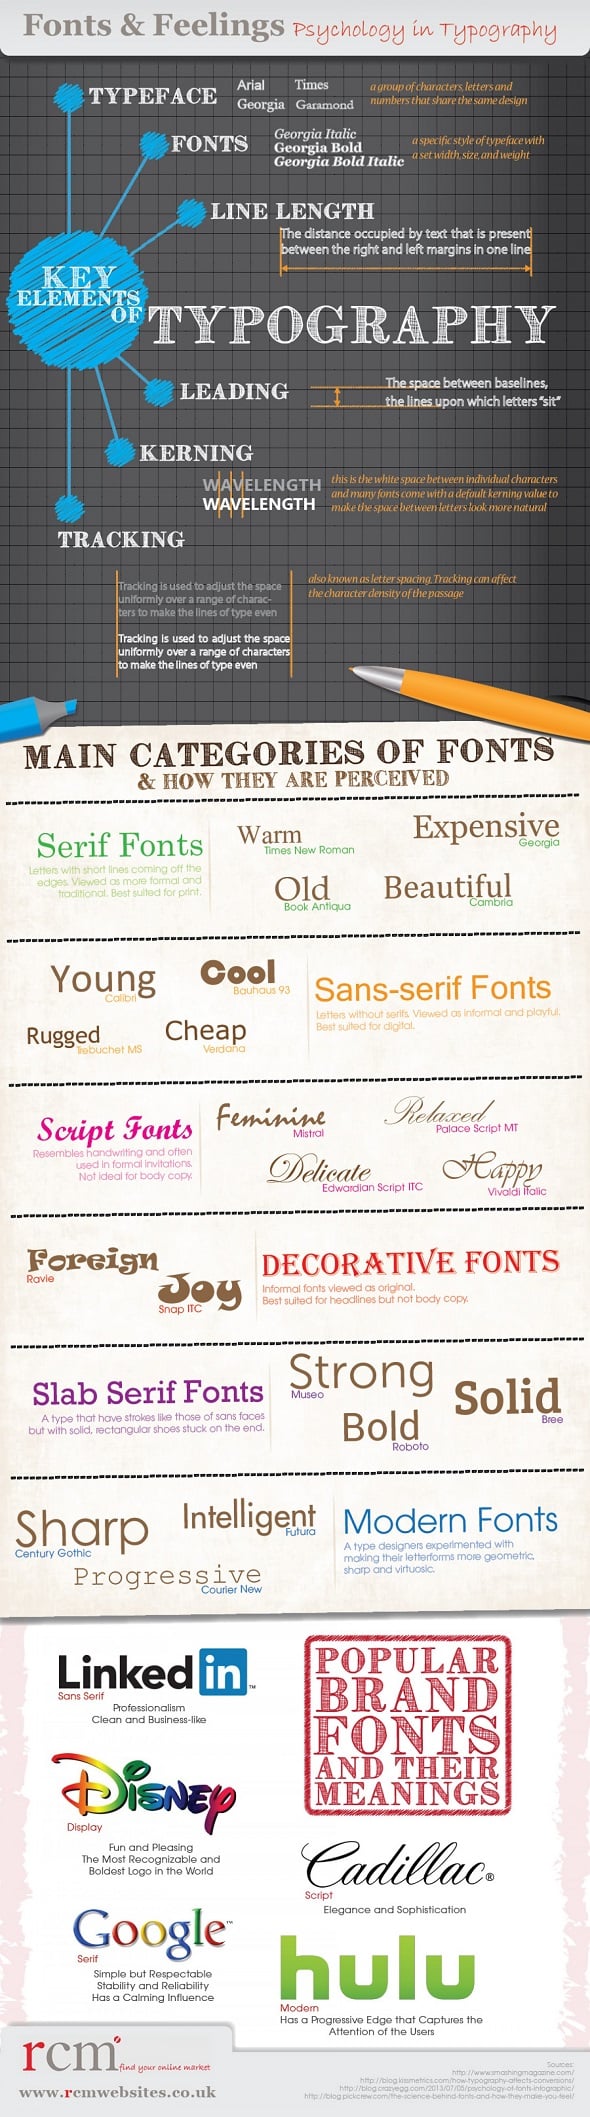 Key Elements of Typography